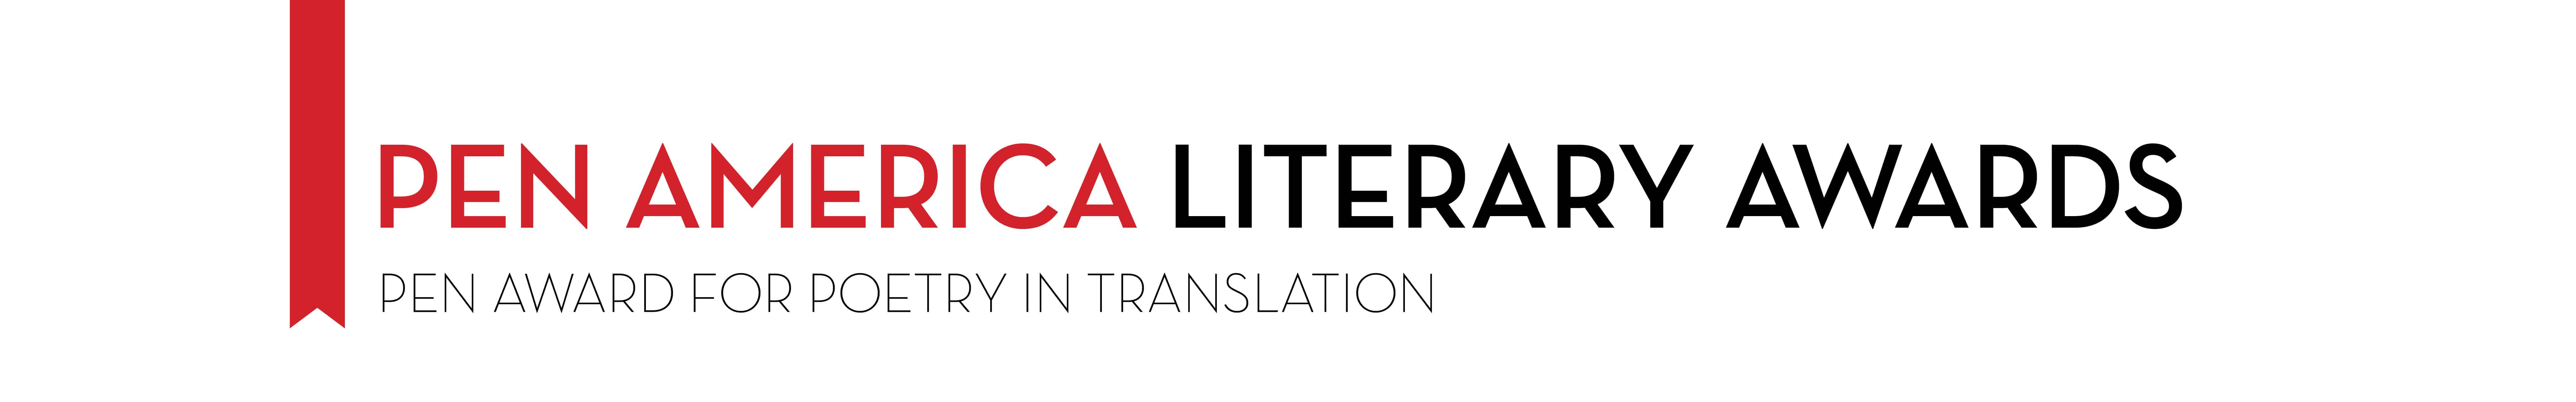 PEN America Literary Awards Poetry in Translation